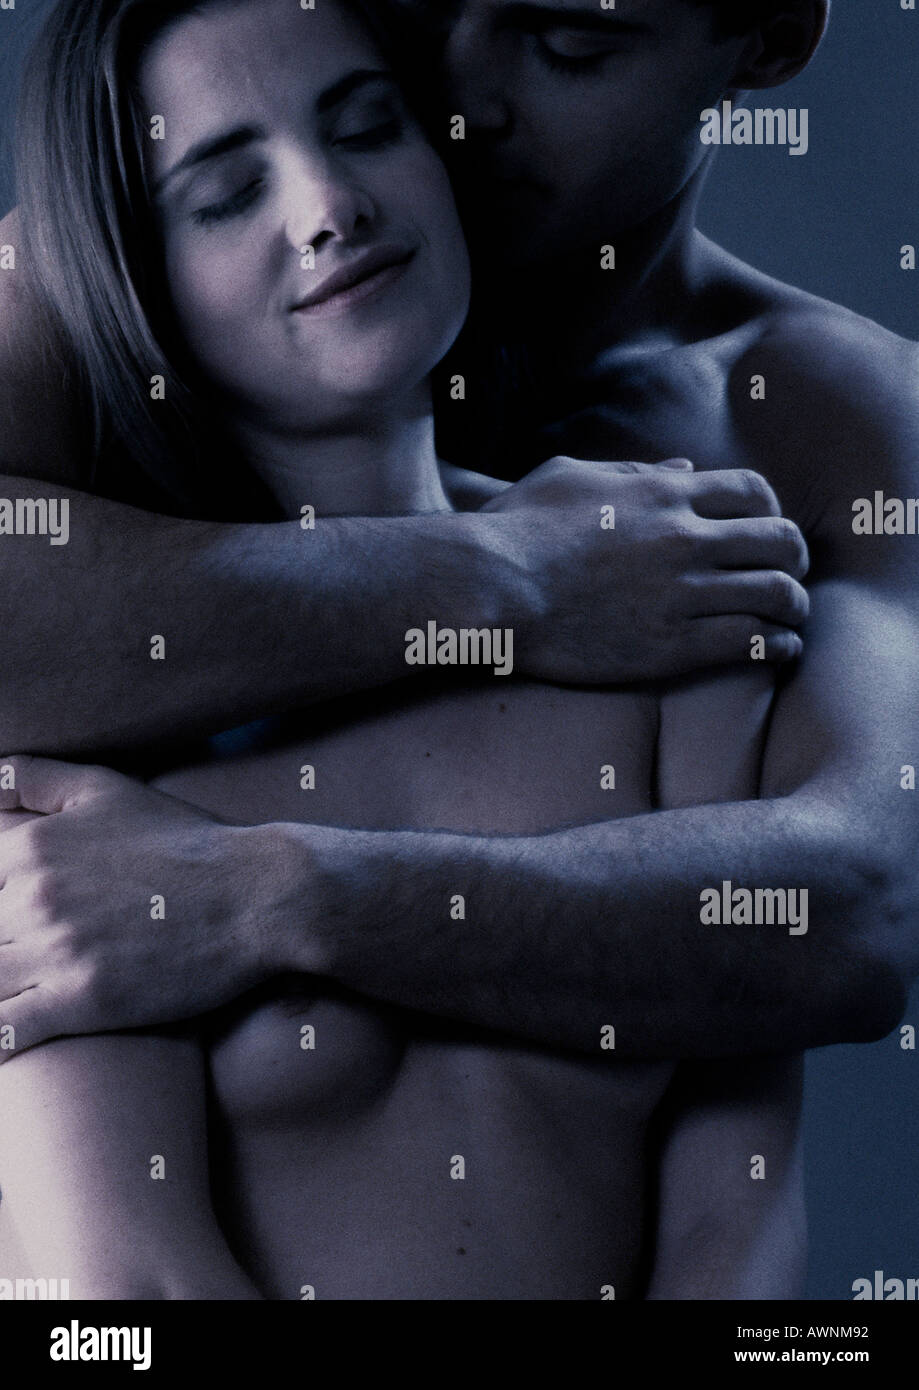 Hombre desnudo abrazando mujer desnuda de espaldas, close-up Fotografía de stock imagen imagen